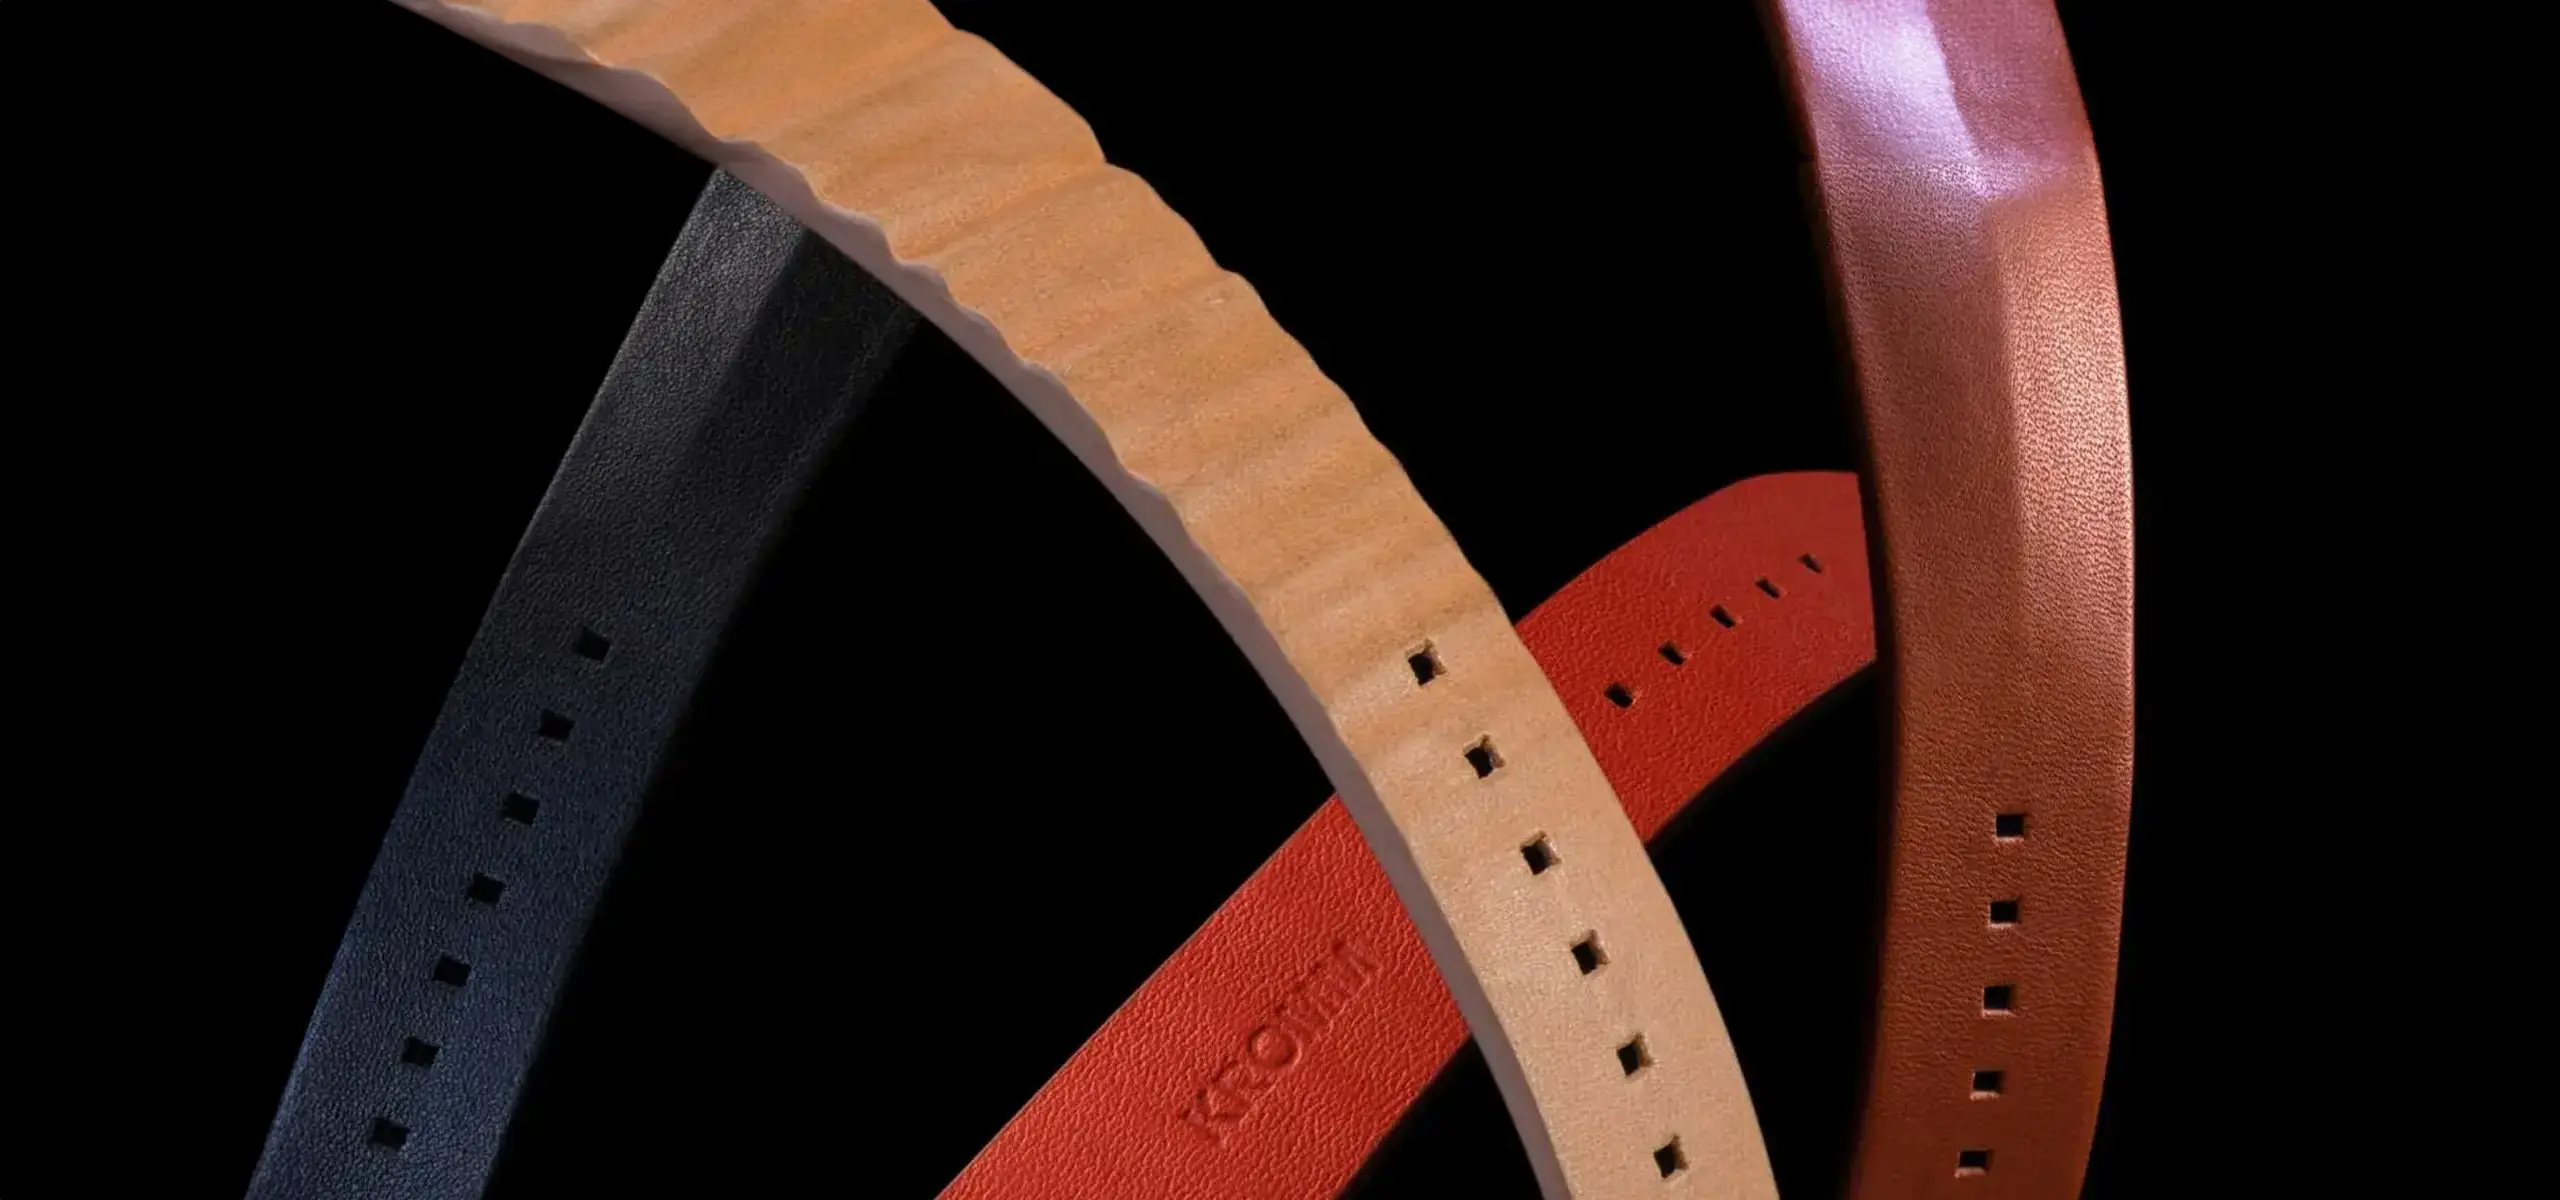 watch strap design for Kromm watches by Groen & Boothman